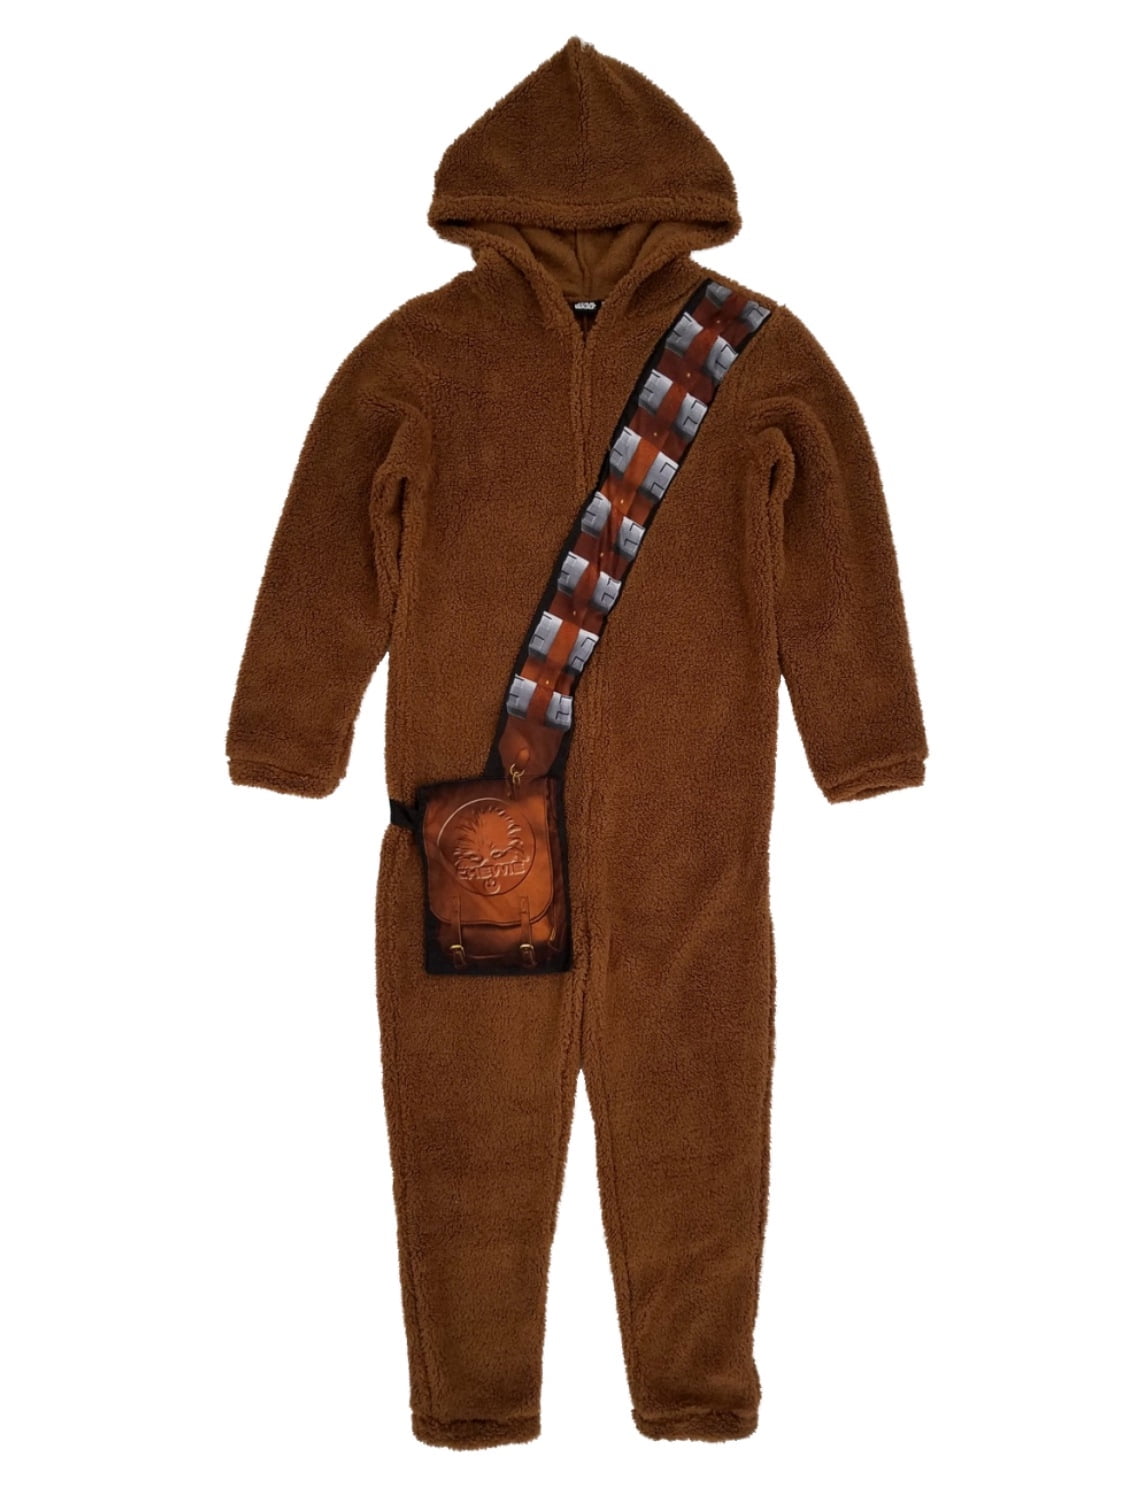 Star Wars Chewbacca Christmas Brown Lounge Pants